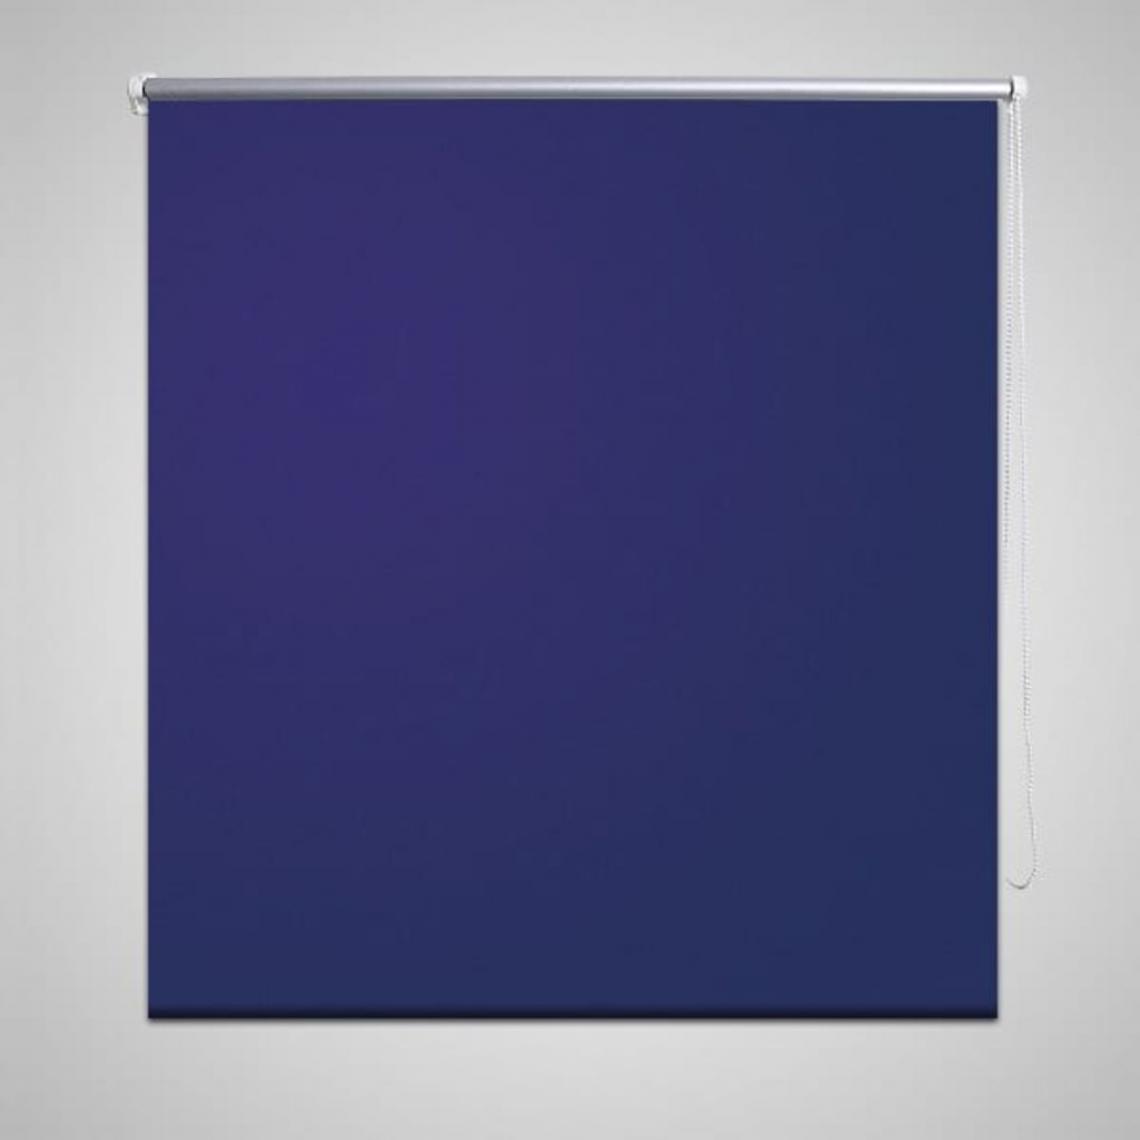 Chunhelife - Store enrouleur occultant 120 x 175 cm bleu - Store banne